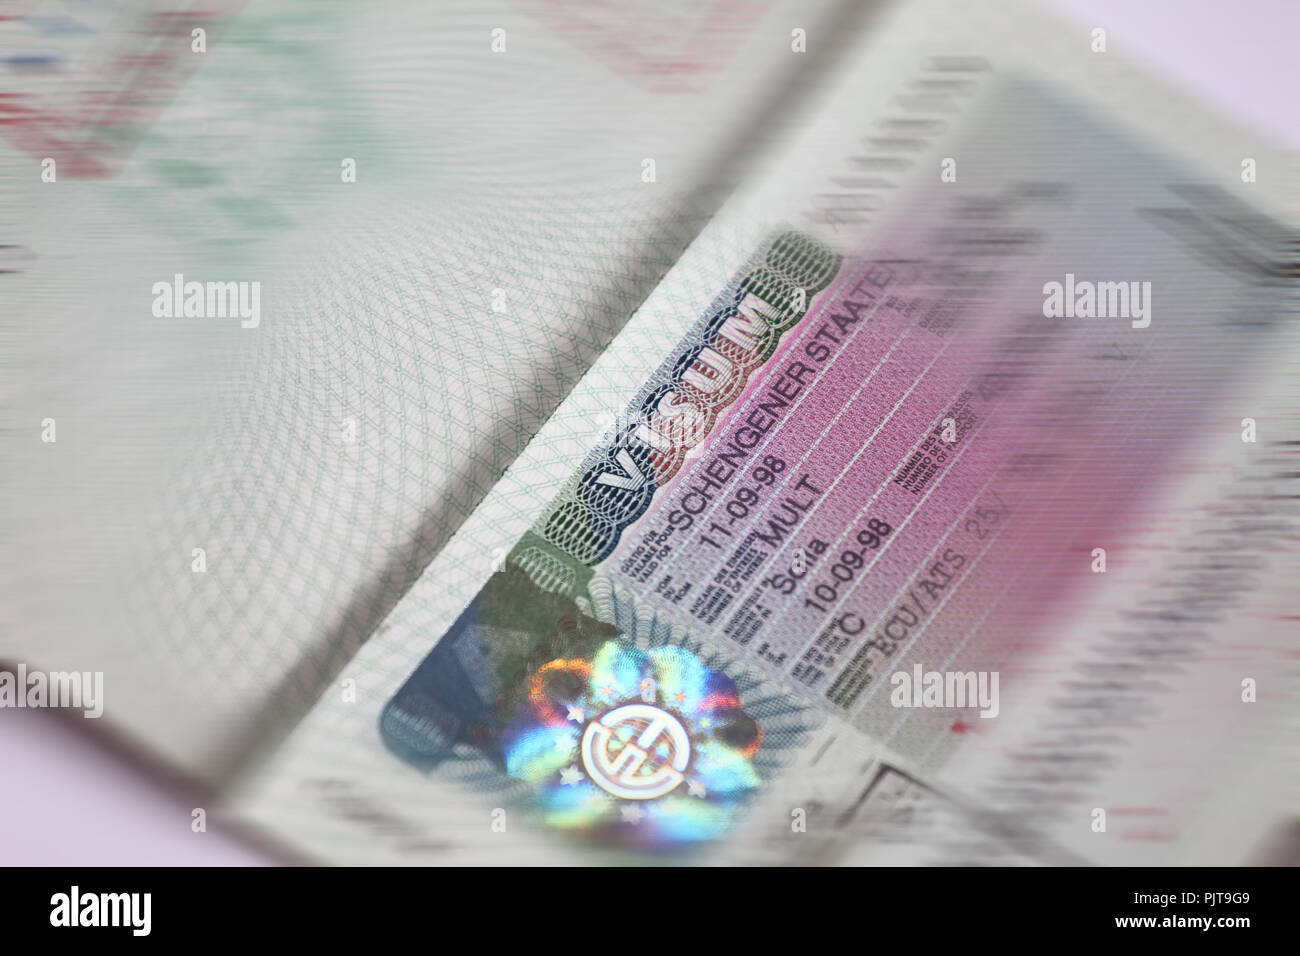 Schengen Visa Stamp In International Passport Shengen Document For Pass Customs Control On 2402